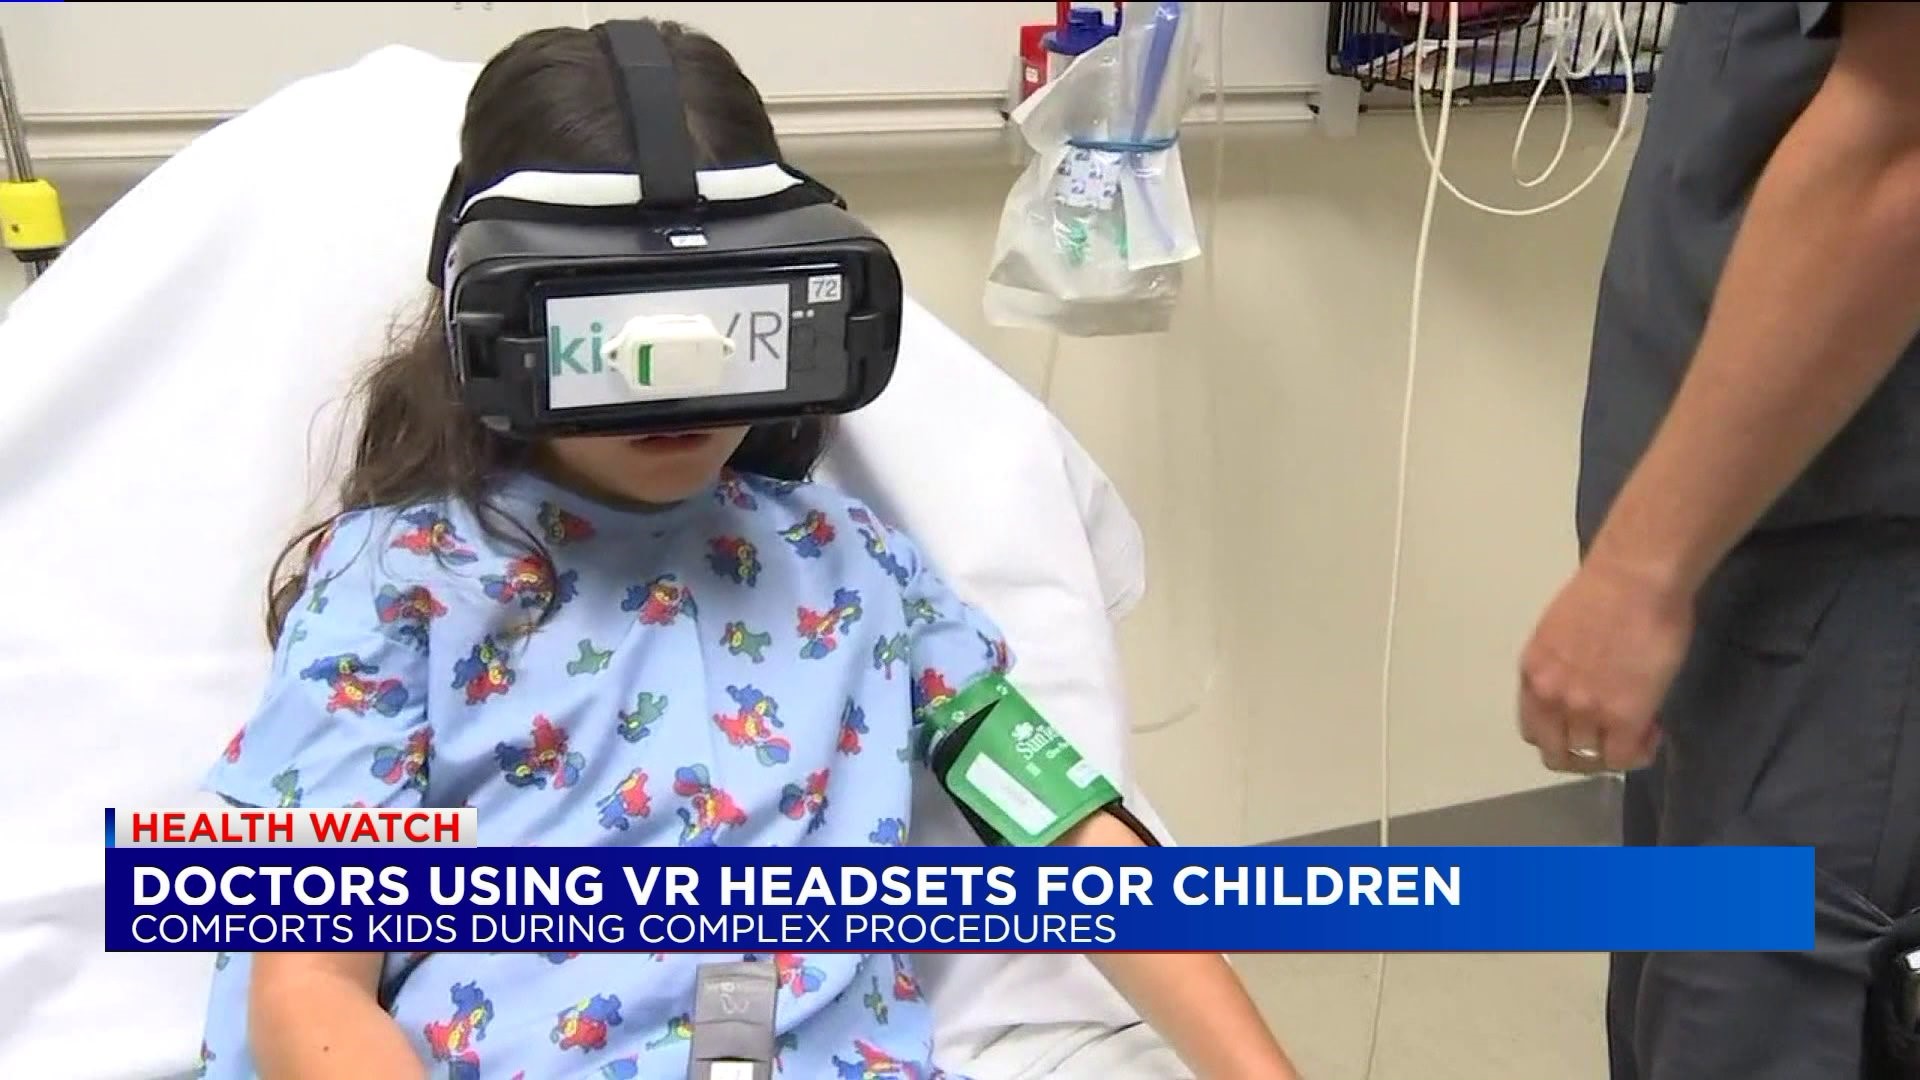 Health Watch: Hi-Tech VR helps